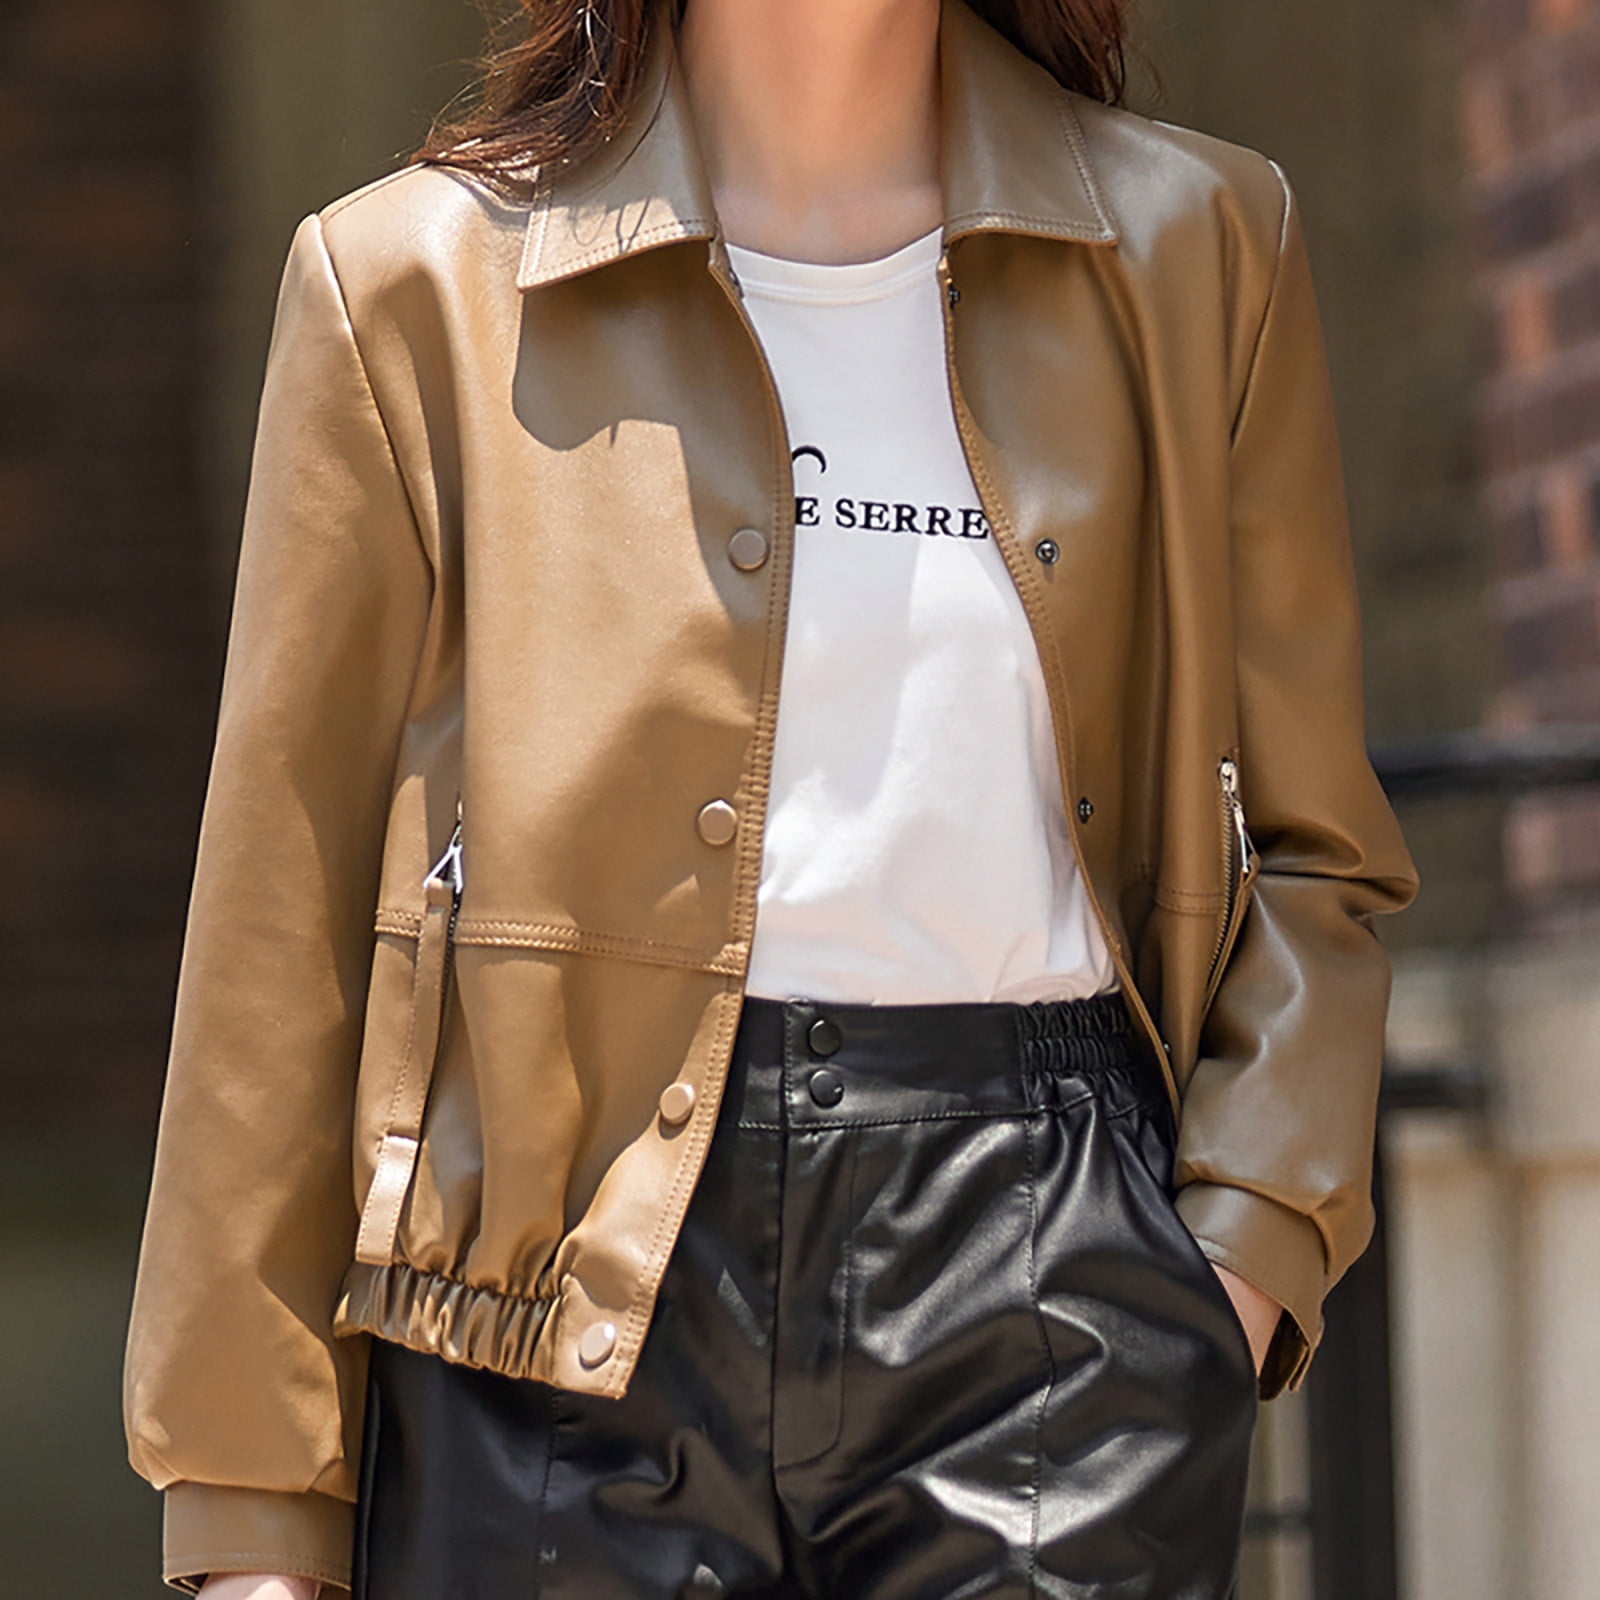 Olyvenn Young Girls Long Sleeve Outwear Jackets Women - Casual Coat Long  Sleeves Suit Style Leather Jacket Women Brown 10 